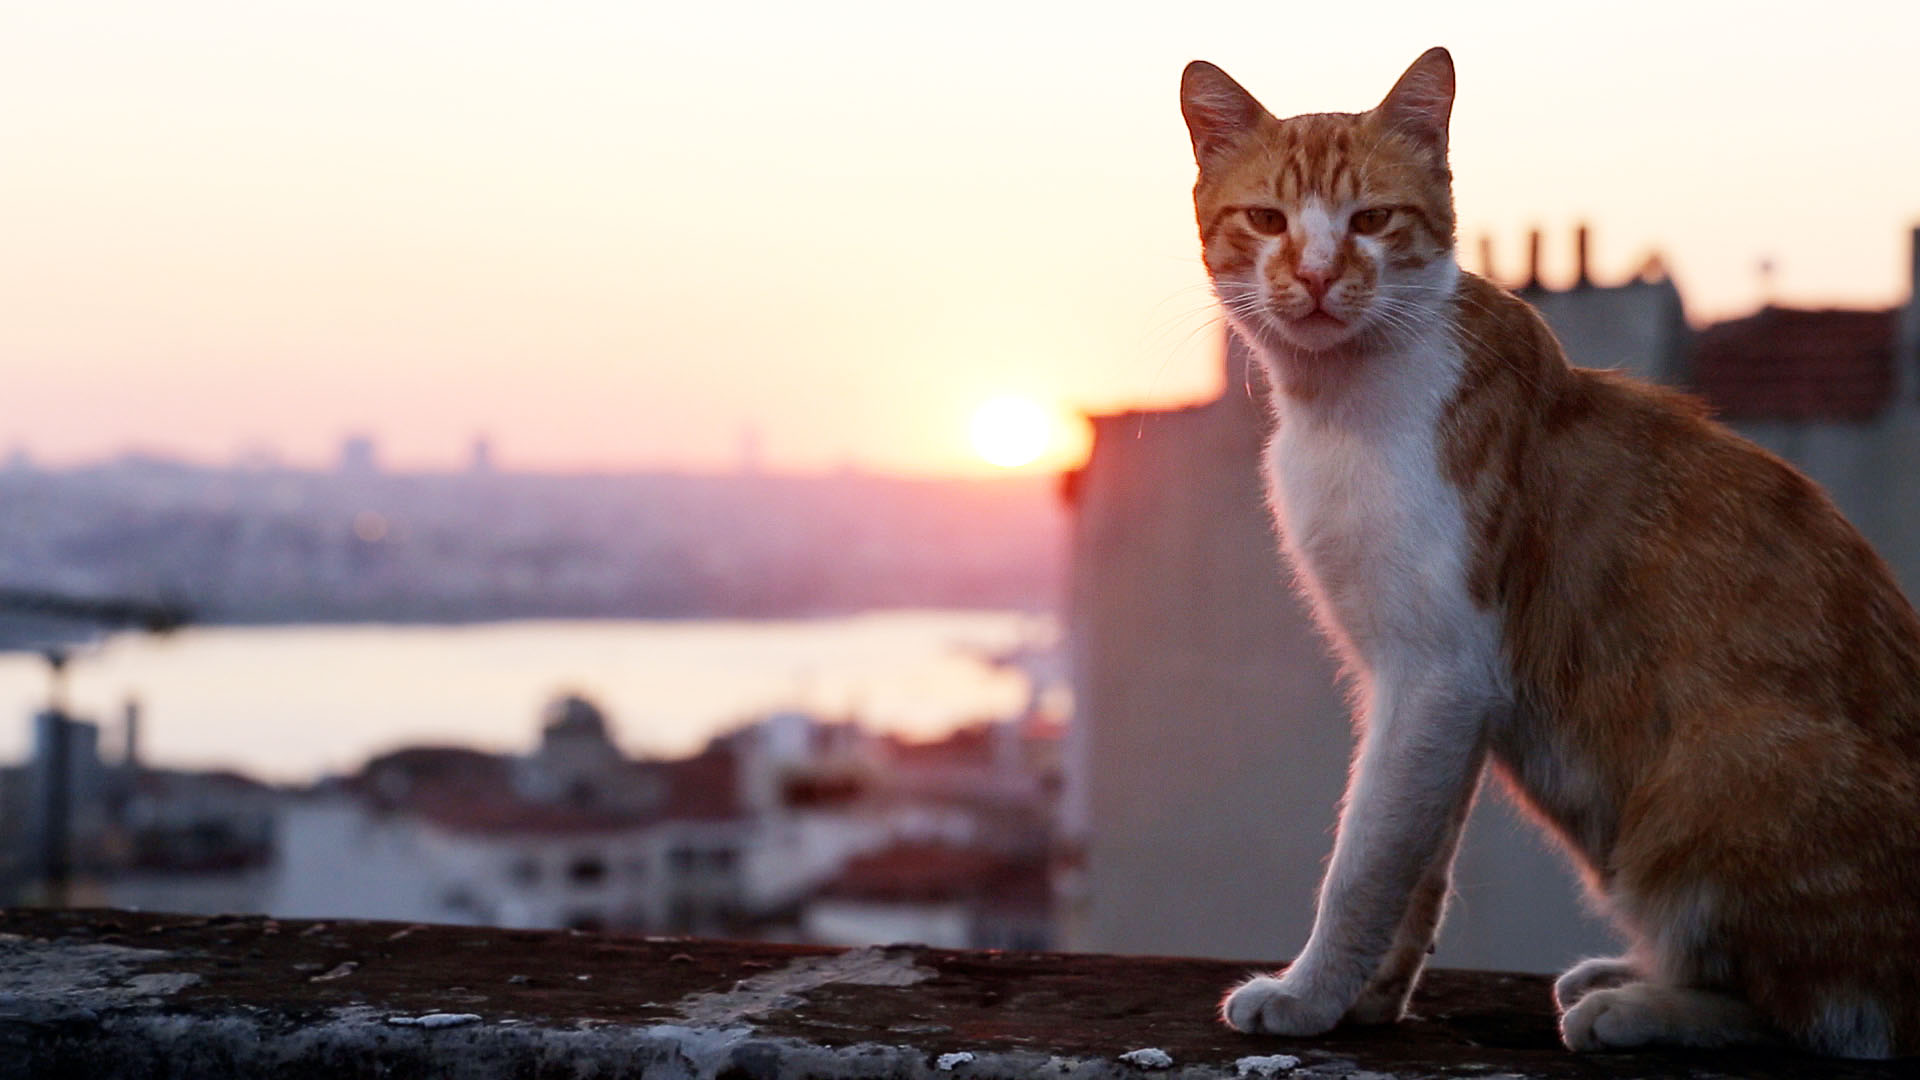 Cat photo contest commemorates Bangkok screening of ‘Kedi’ Turkish cat